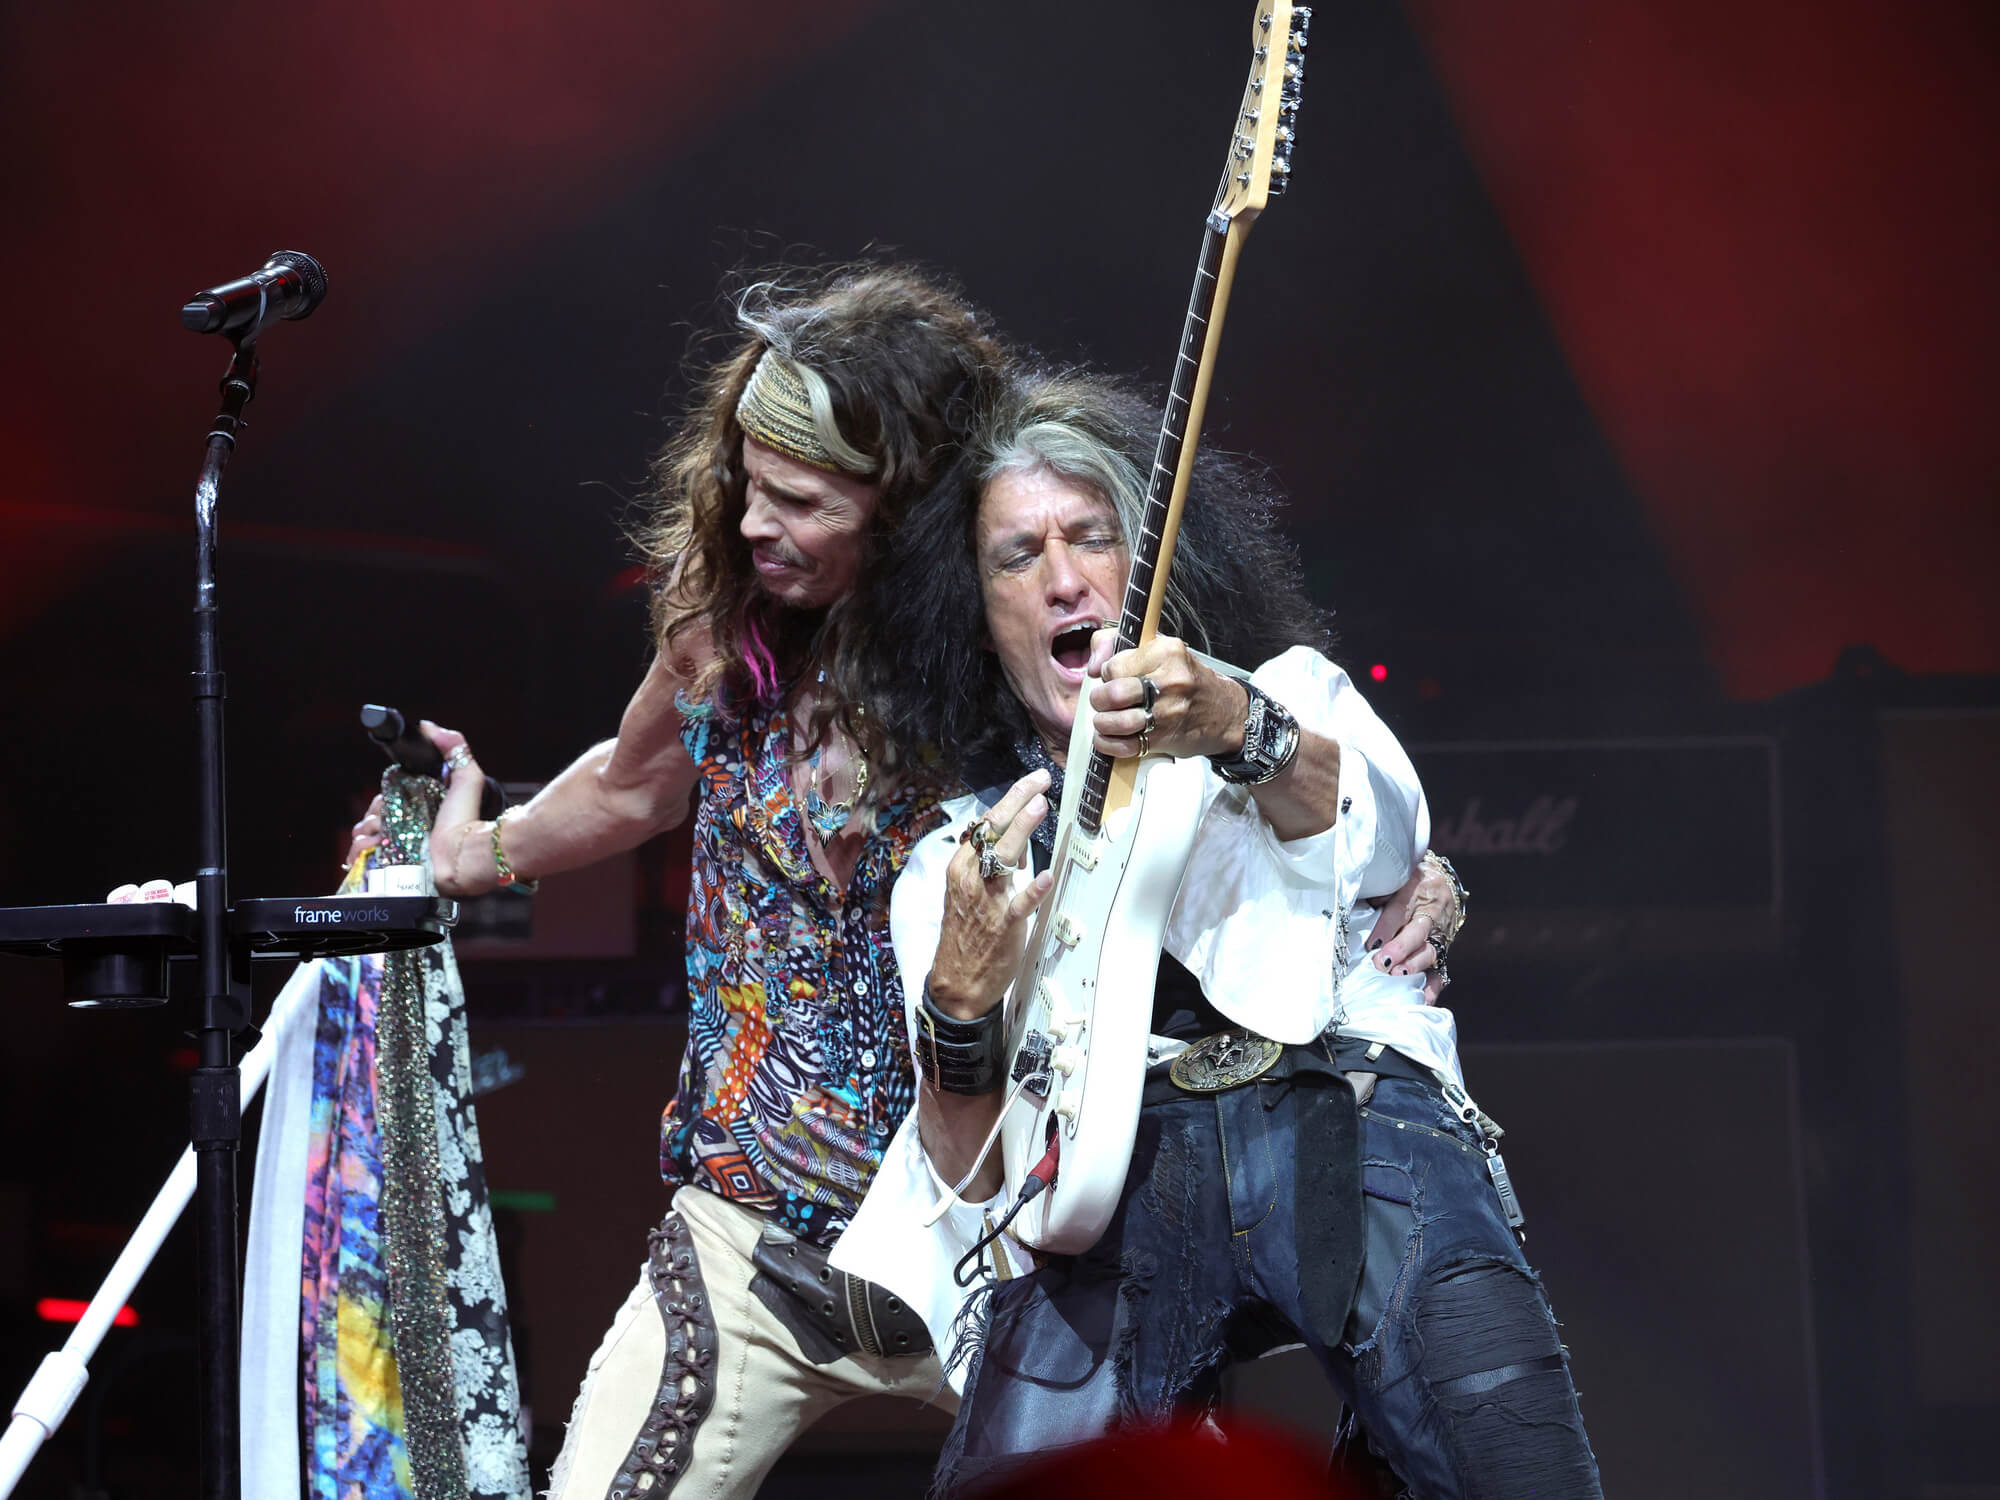 Aerosmith PEACE OUT tour